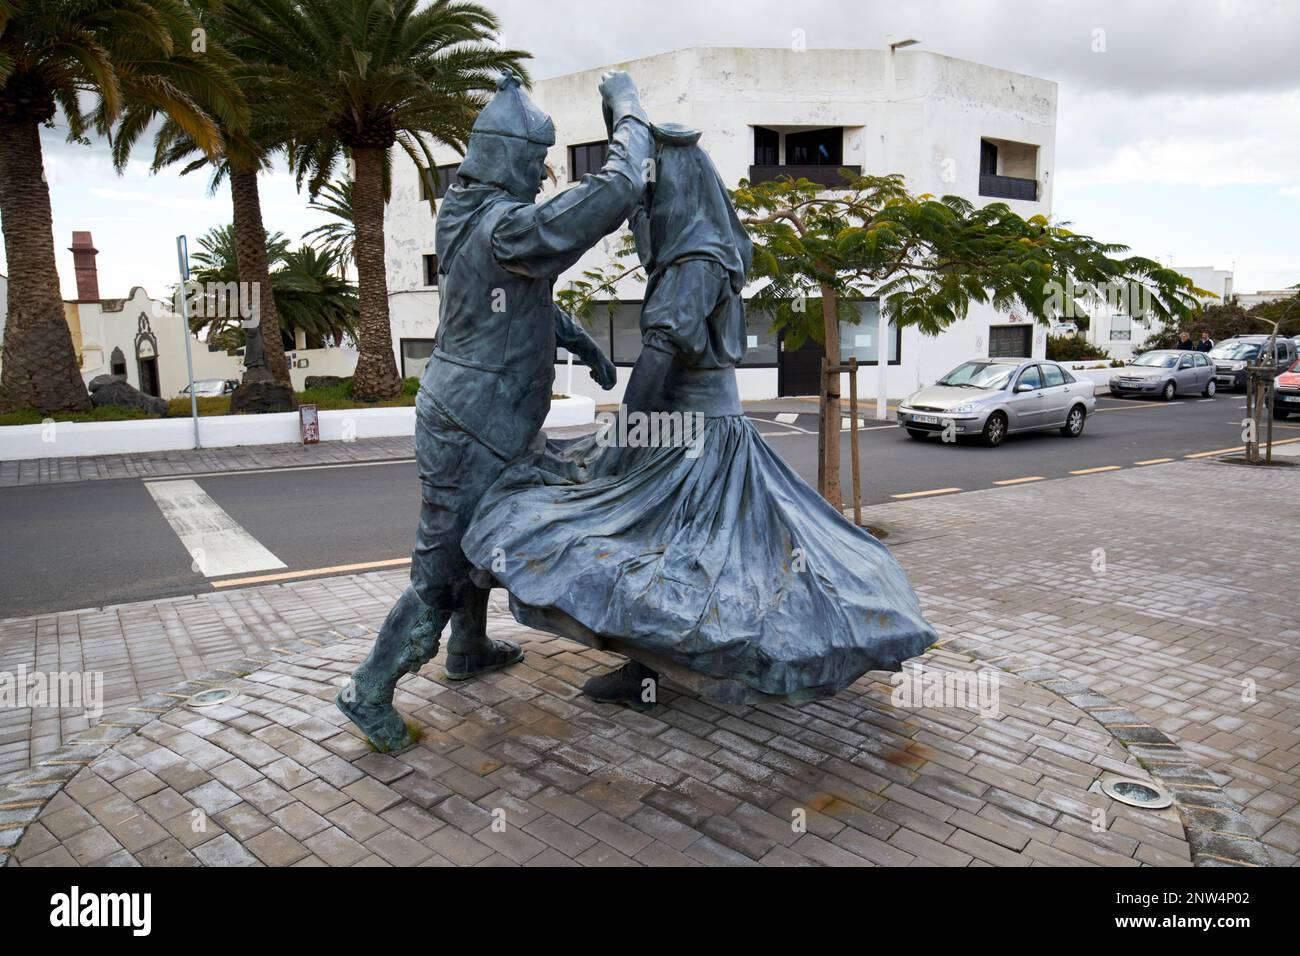 dancers bailarines sculpture San Bartolome Lanzarote, Canary Islands, Spain Stock Photo